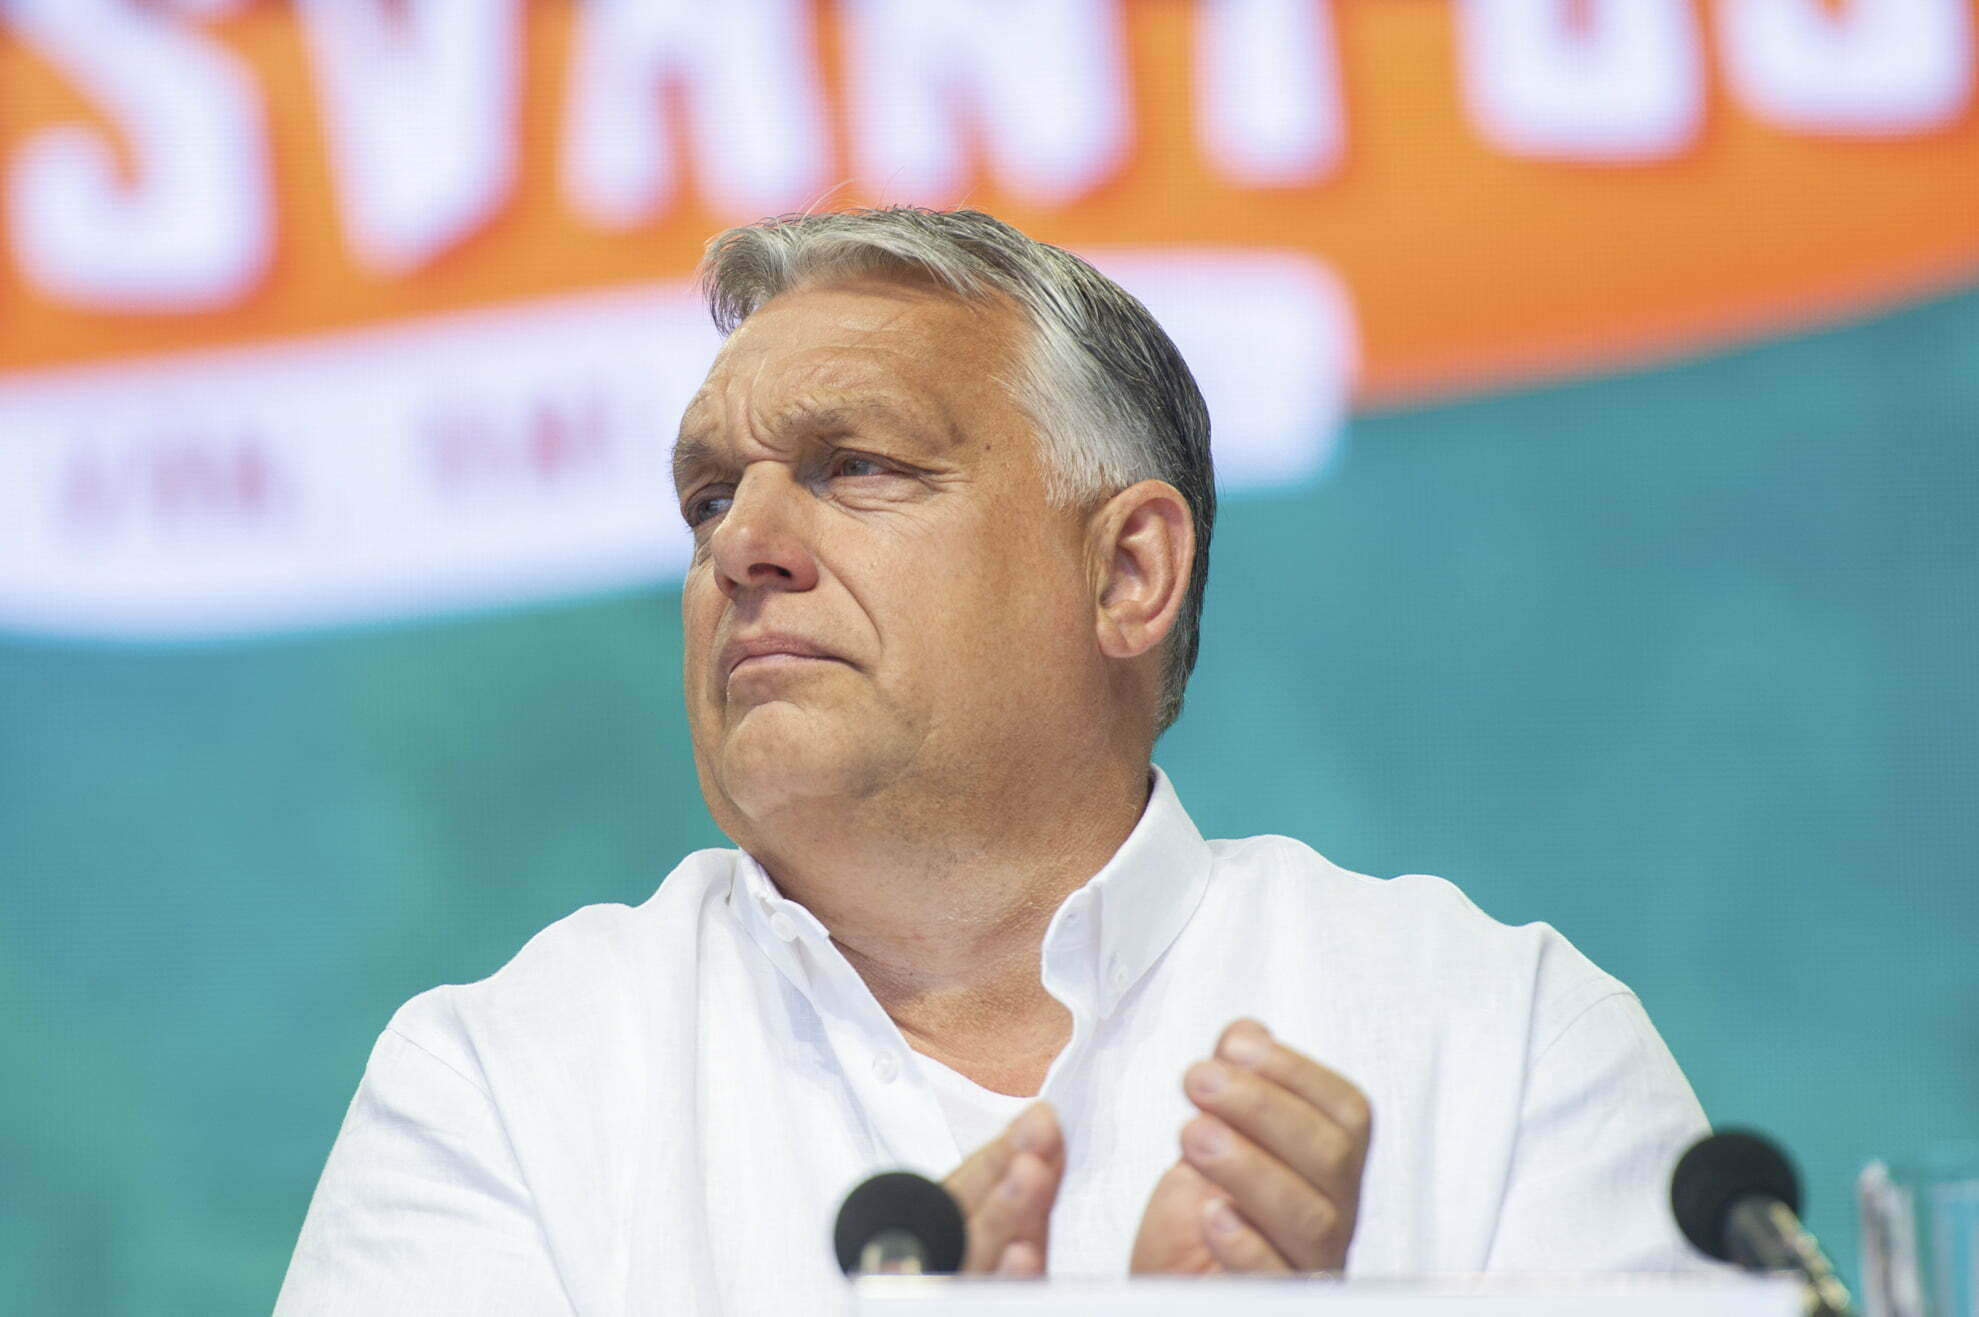 Orbán Viktor, discurs pro-rus în România